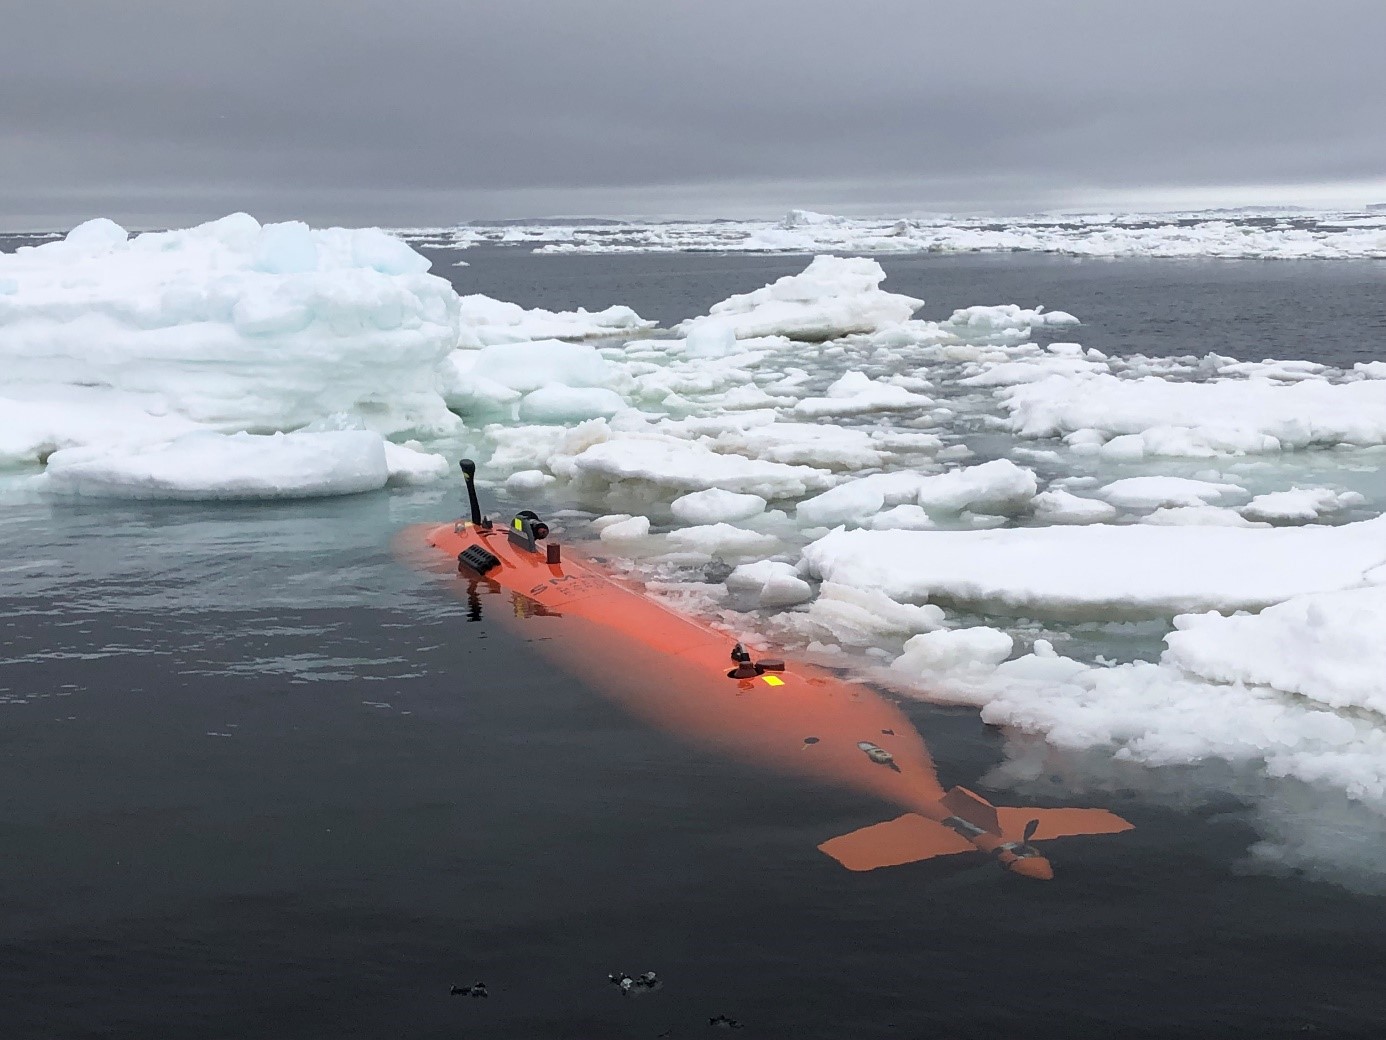 An orange marine robot in icy water